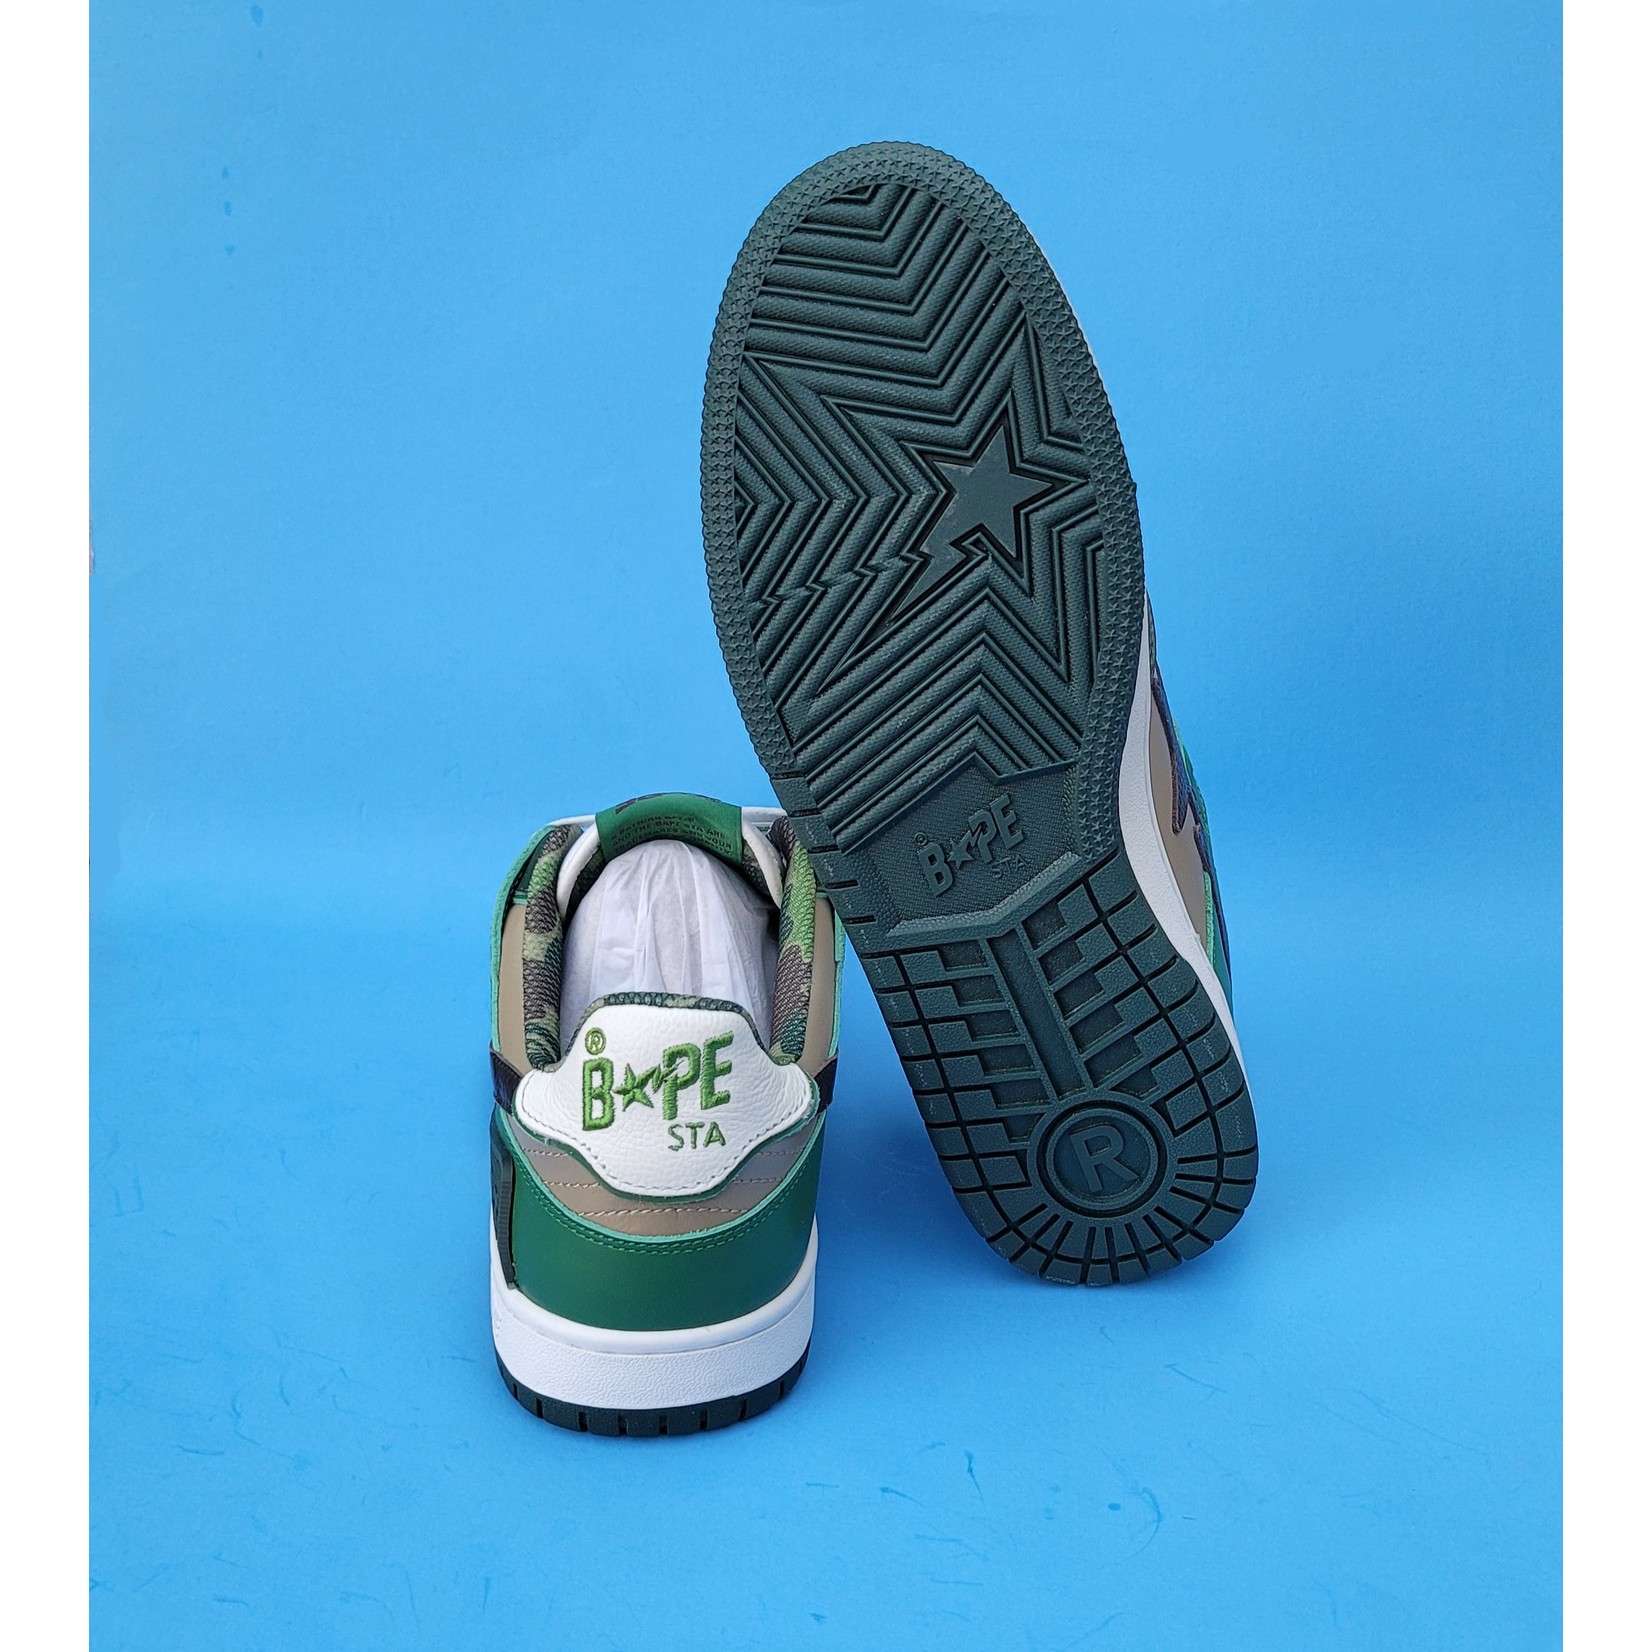 Bape Sk8 Sta Green Camo Sole Food Sneakers